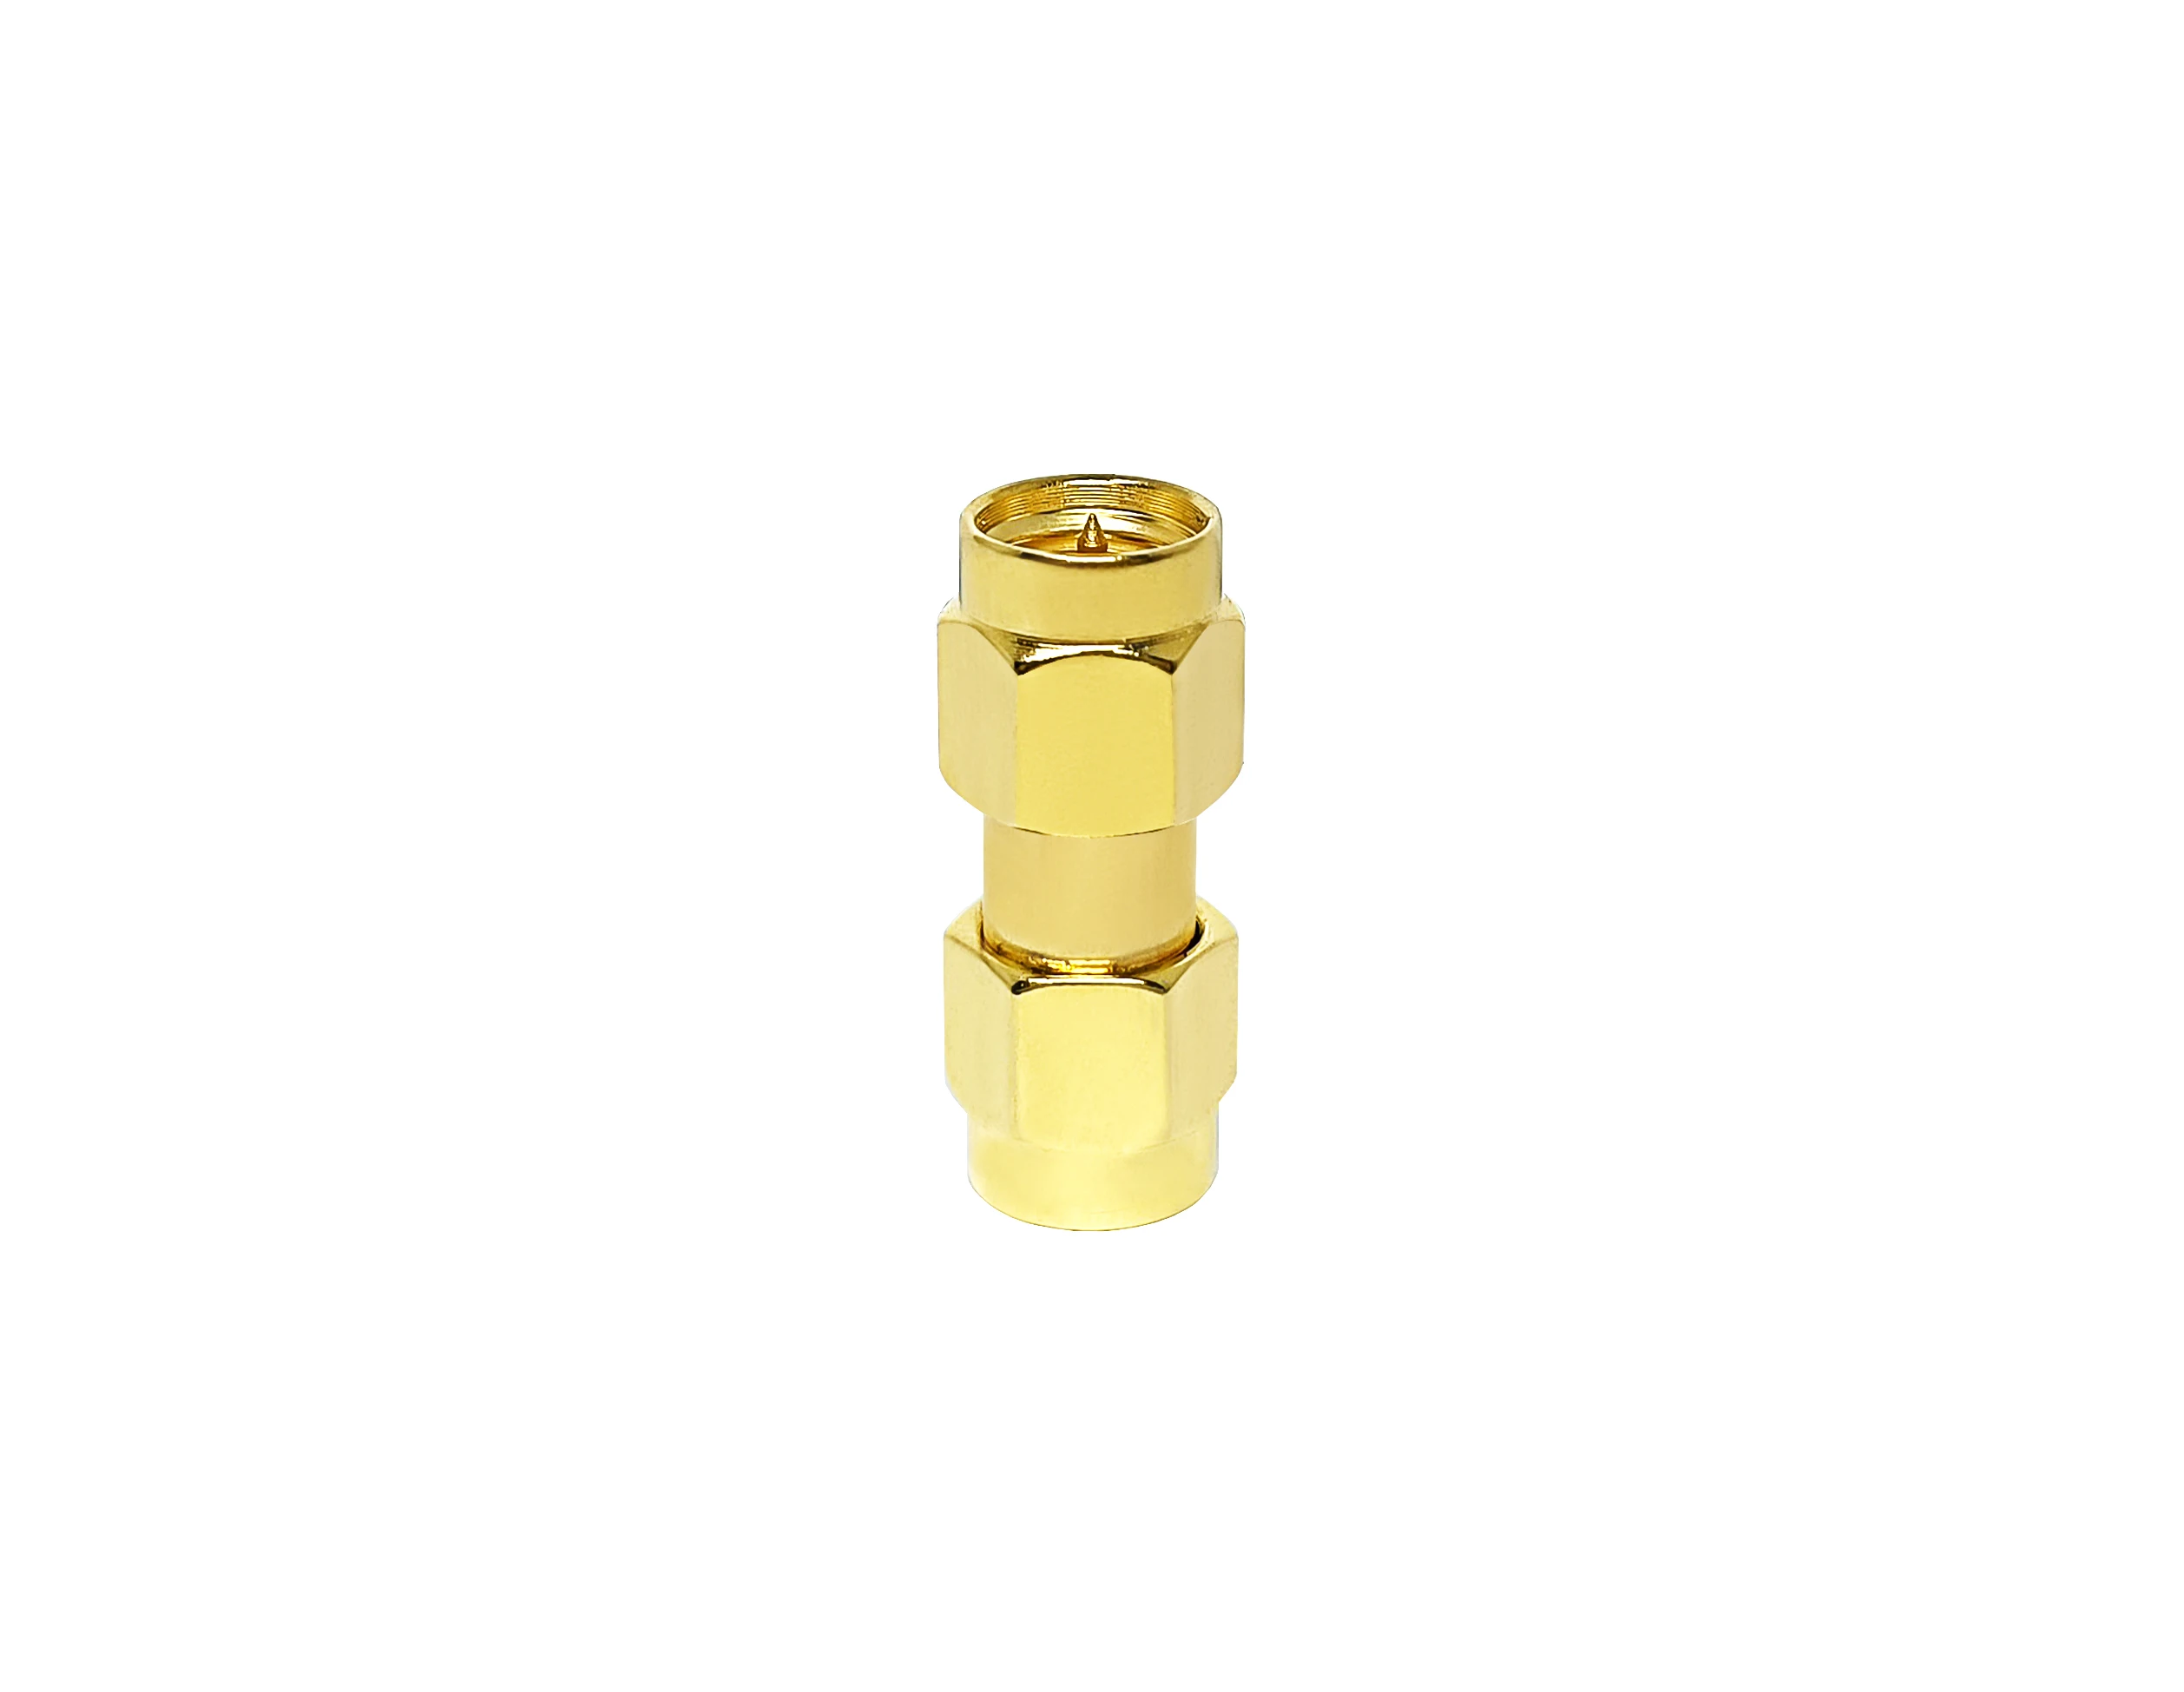 Adapters jack plug  N  sma  Smb  7/16 din  4.310 din male female Kits coaxial adaptor details